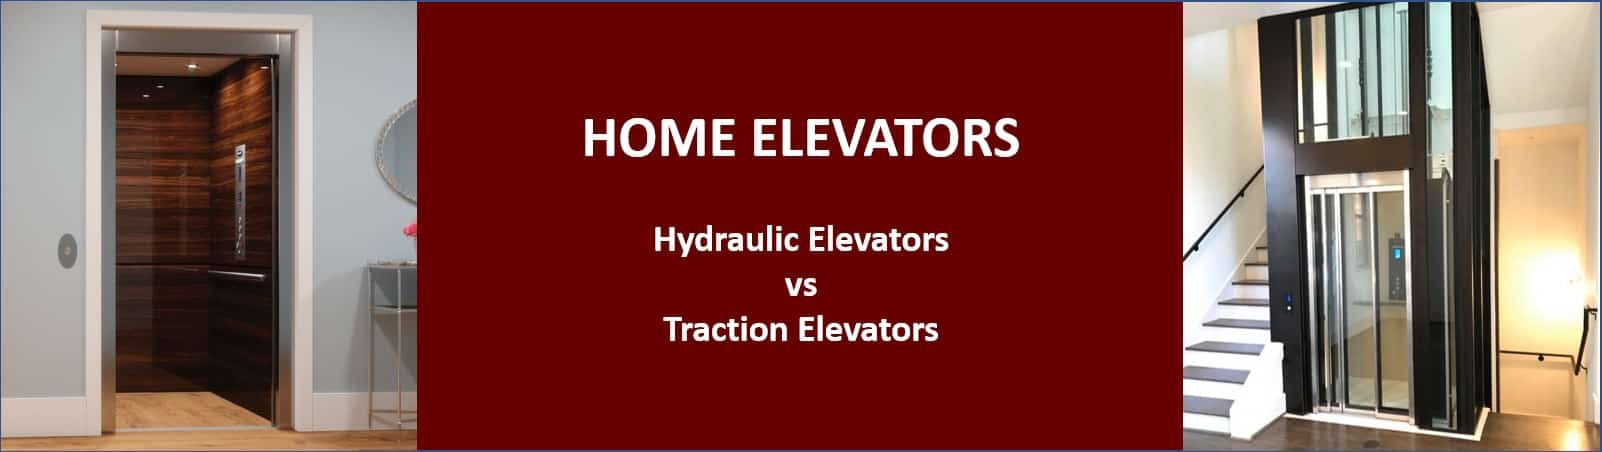 hydraulic versus traction elevators comparison